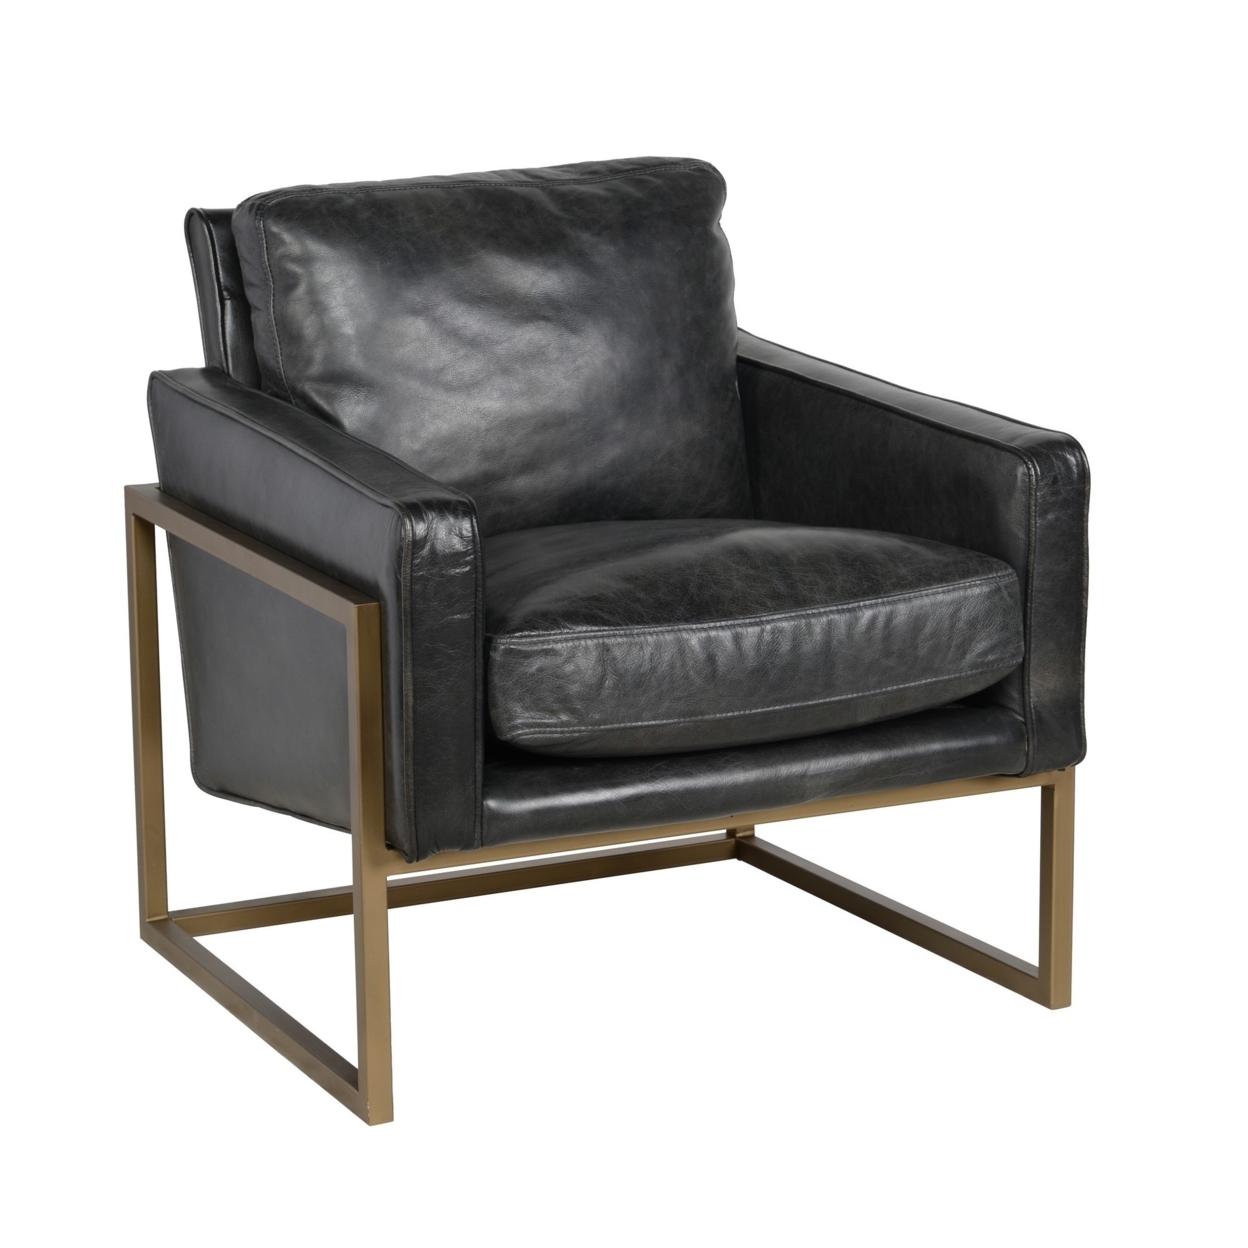 30 Inch Classic Club Chair, Top Grain Black Leather Upholstery, Brass Frame- Saltoro Sherpi